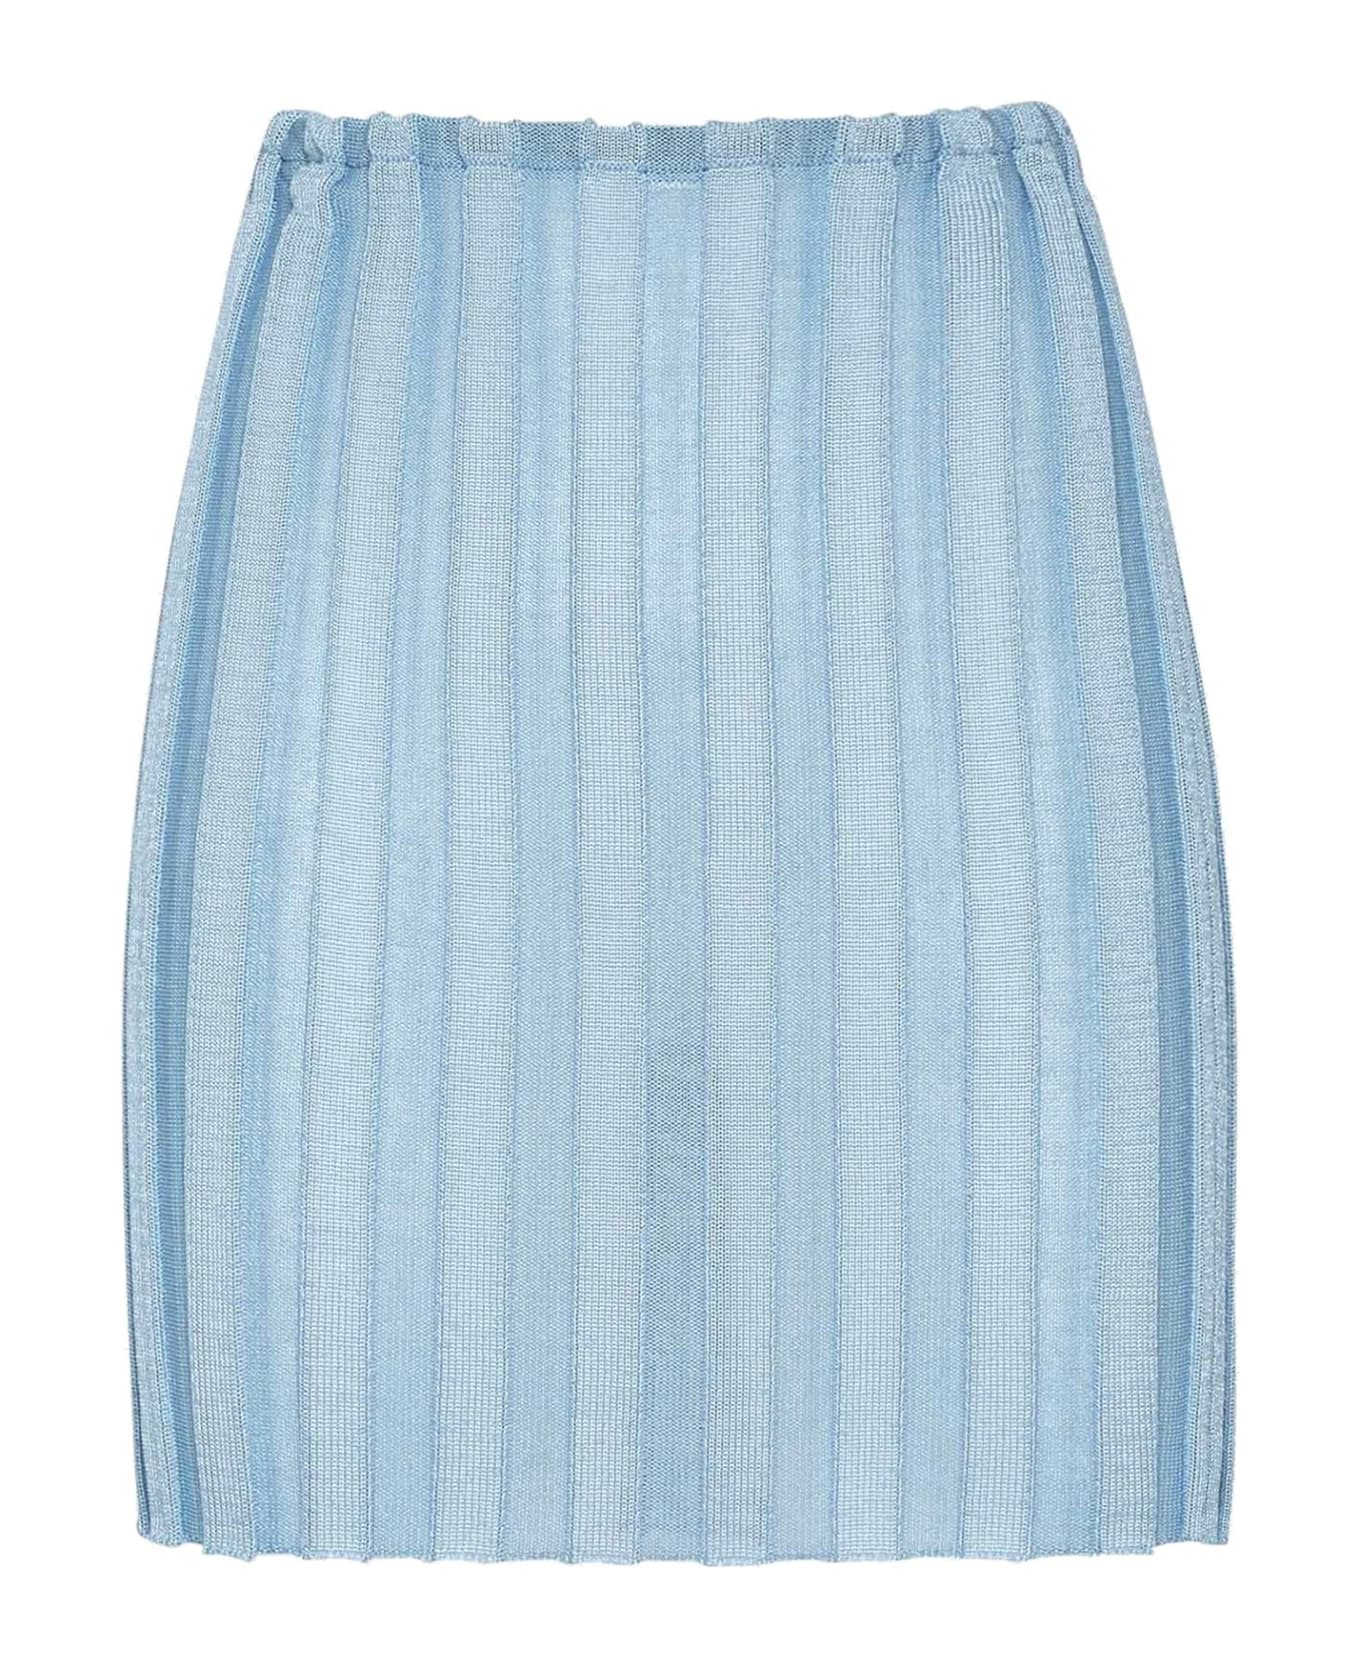 A. Roege Hove Katrine Mini Skirt - ICY BLUE (Light blue)